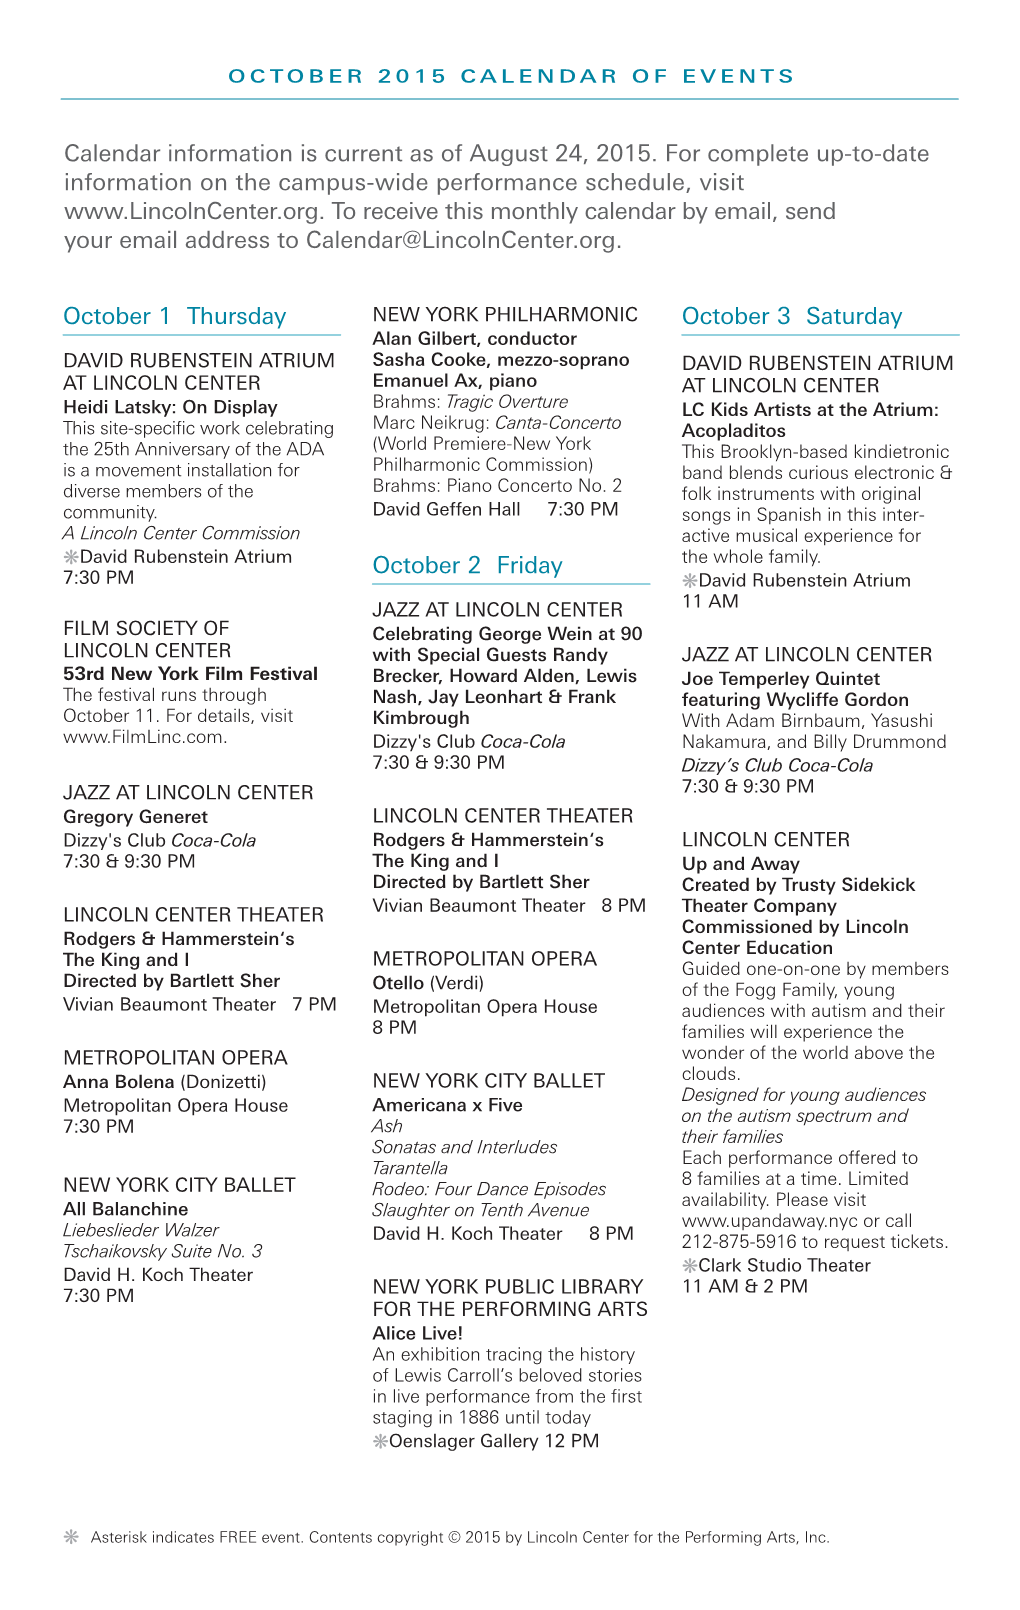 Lincoln Center Oct 2015 Calendar of Events